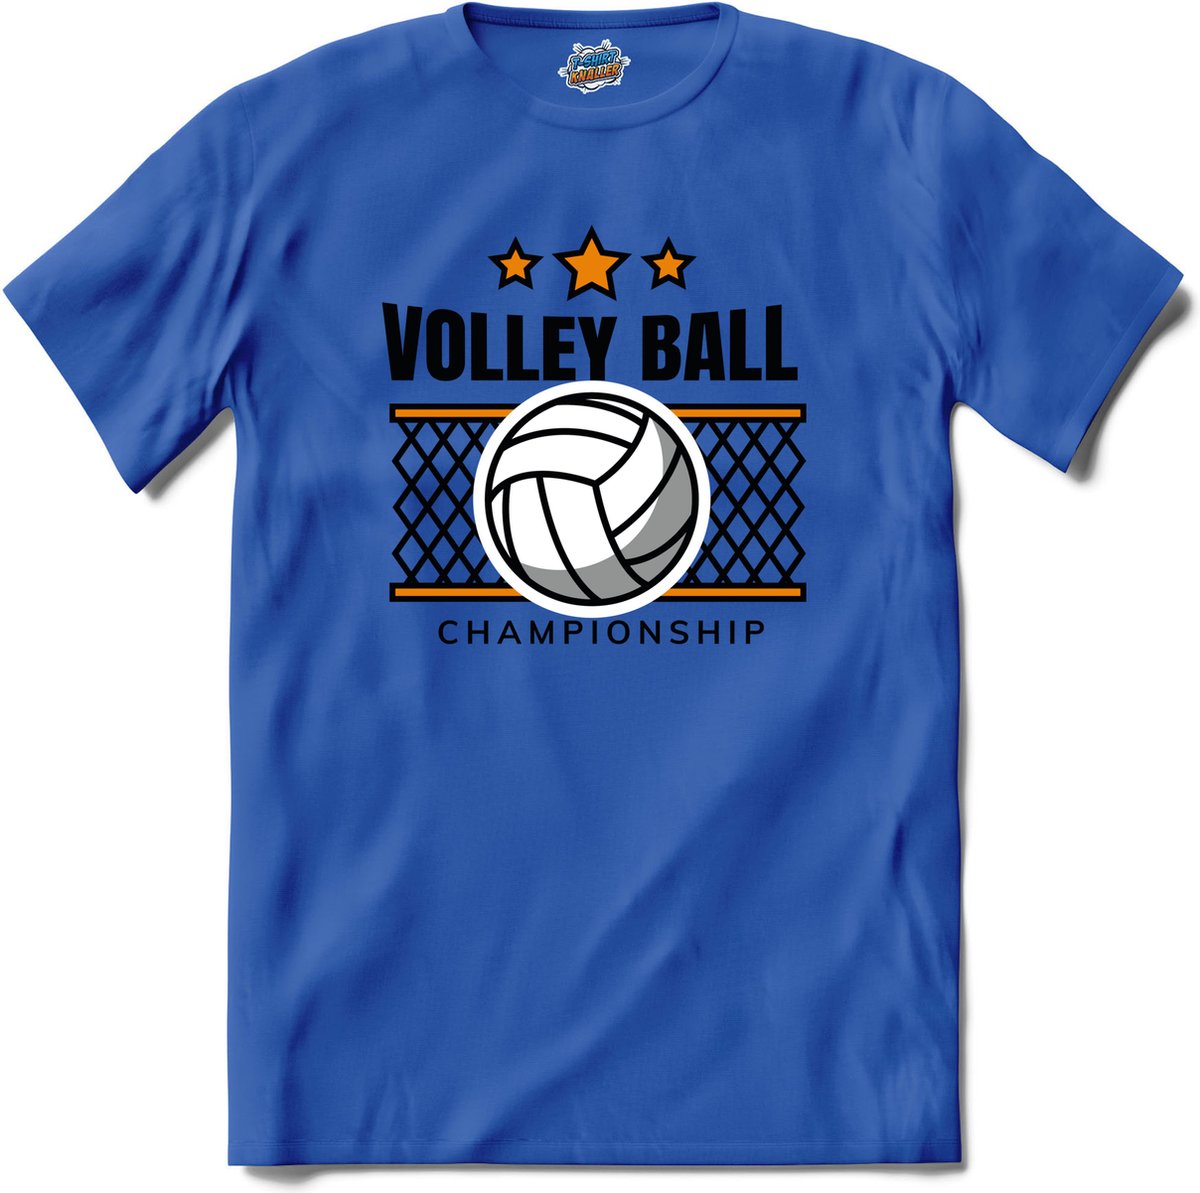 Volleybal net sport - T-Shirt - Meisjes - Royal Blue - Maat 10 jaar